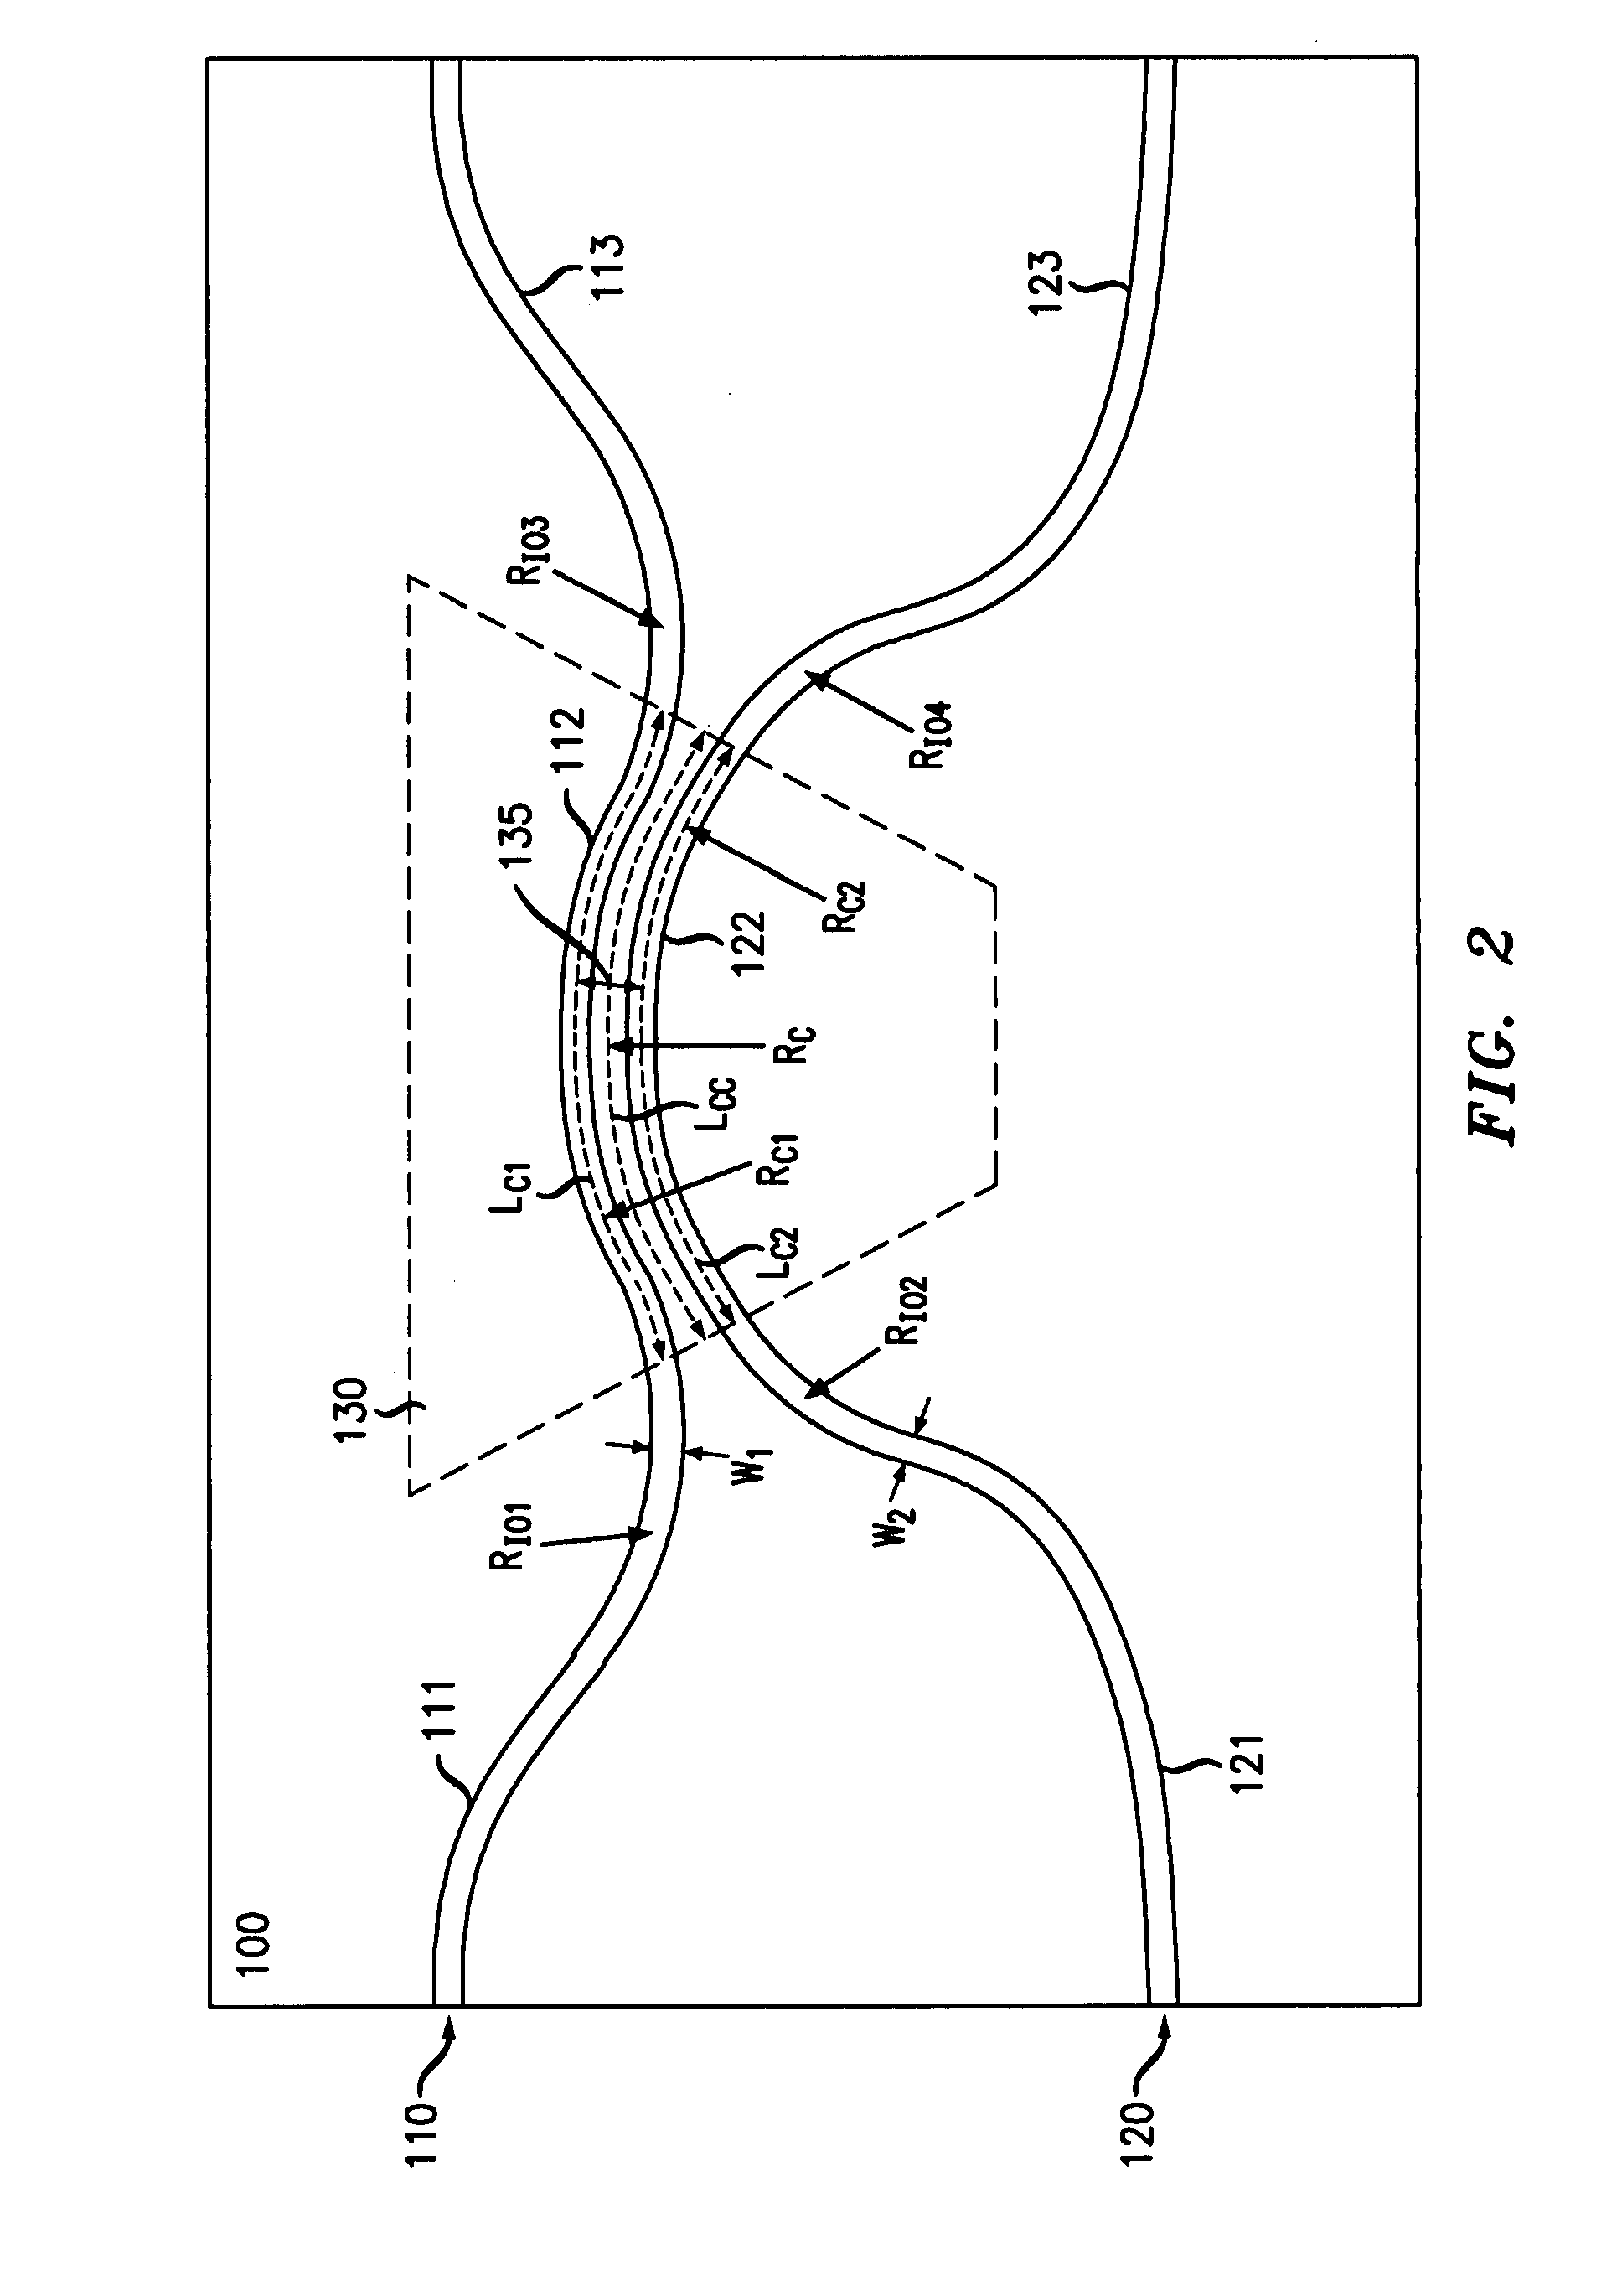 Optical coupler apparatus and method